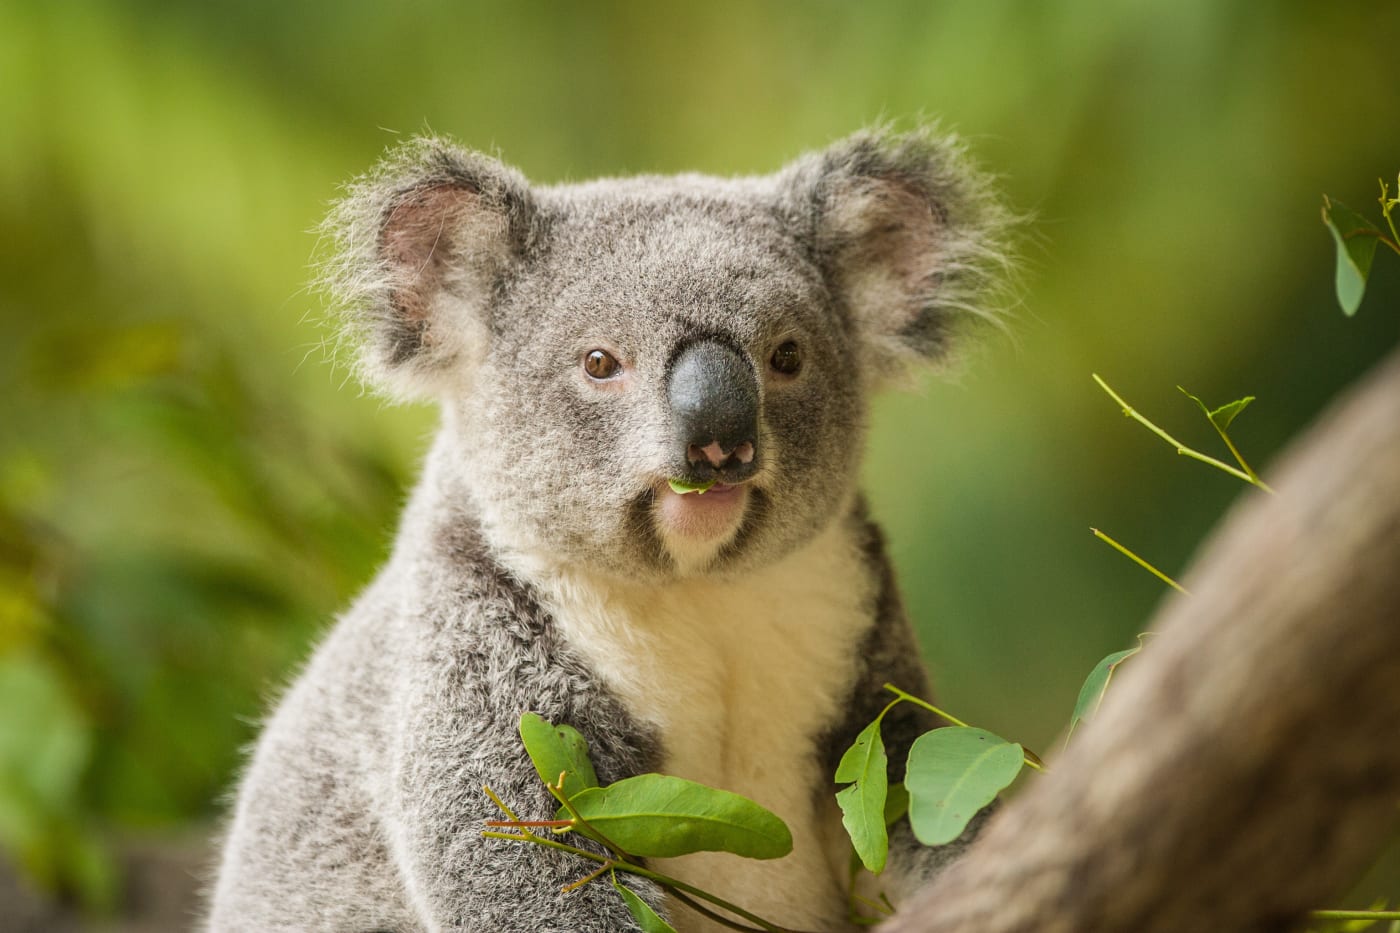 Koala eating eucalypt leaves